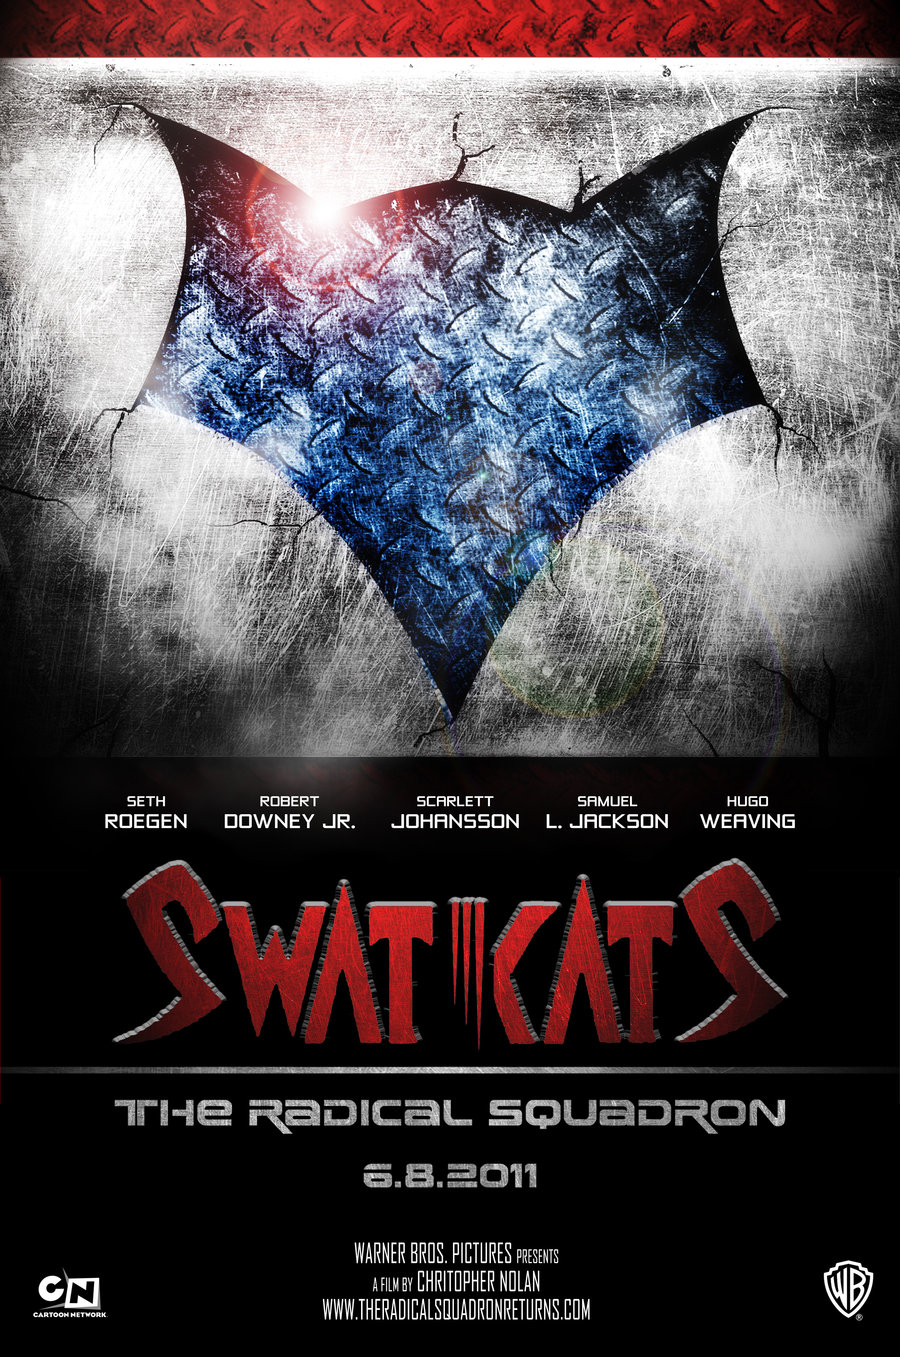 SWAT KATS movie poster by TheItalianPlumber on DeviantArt